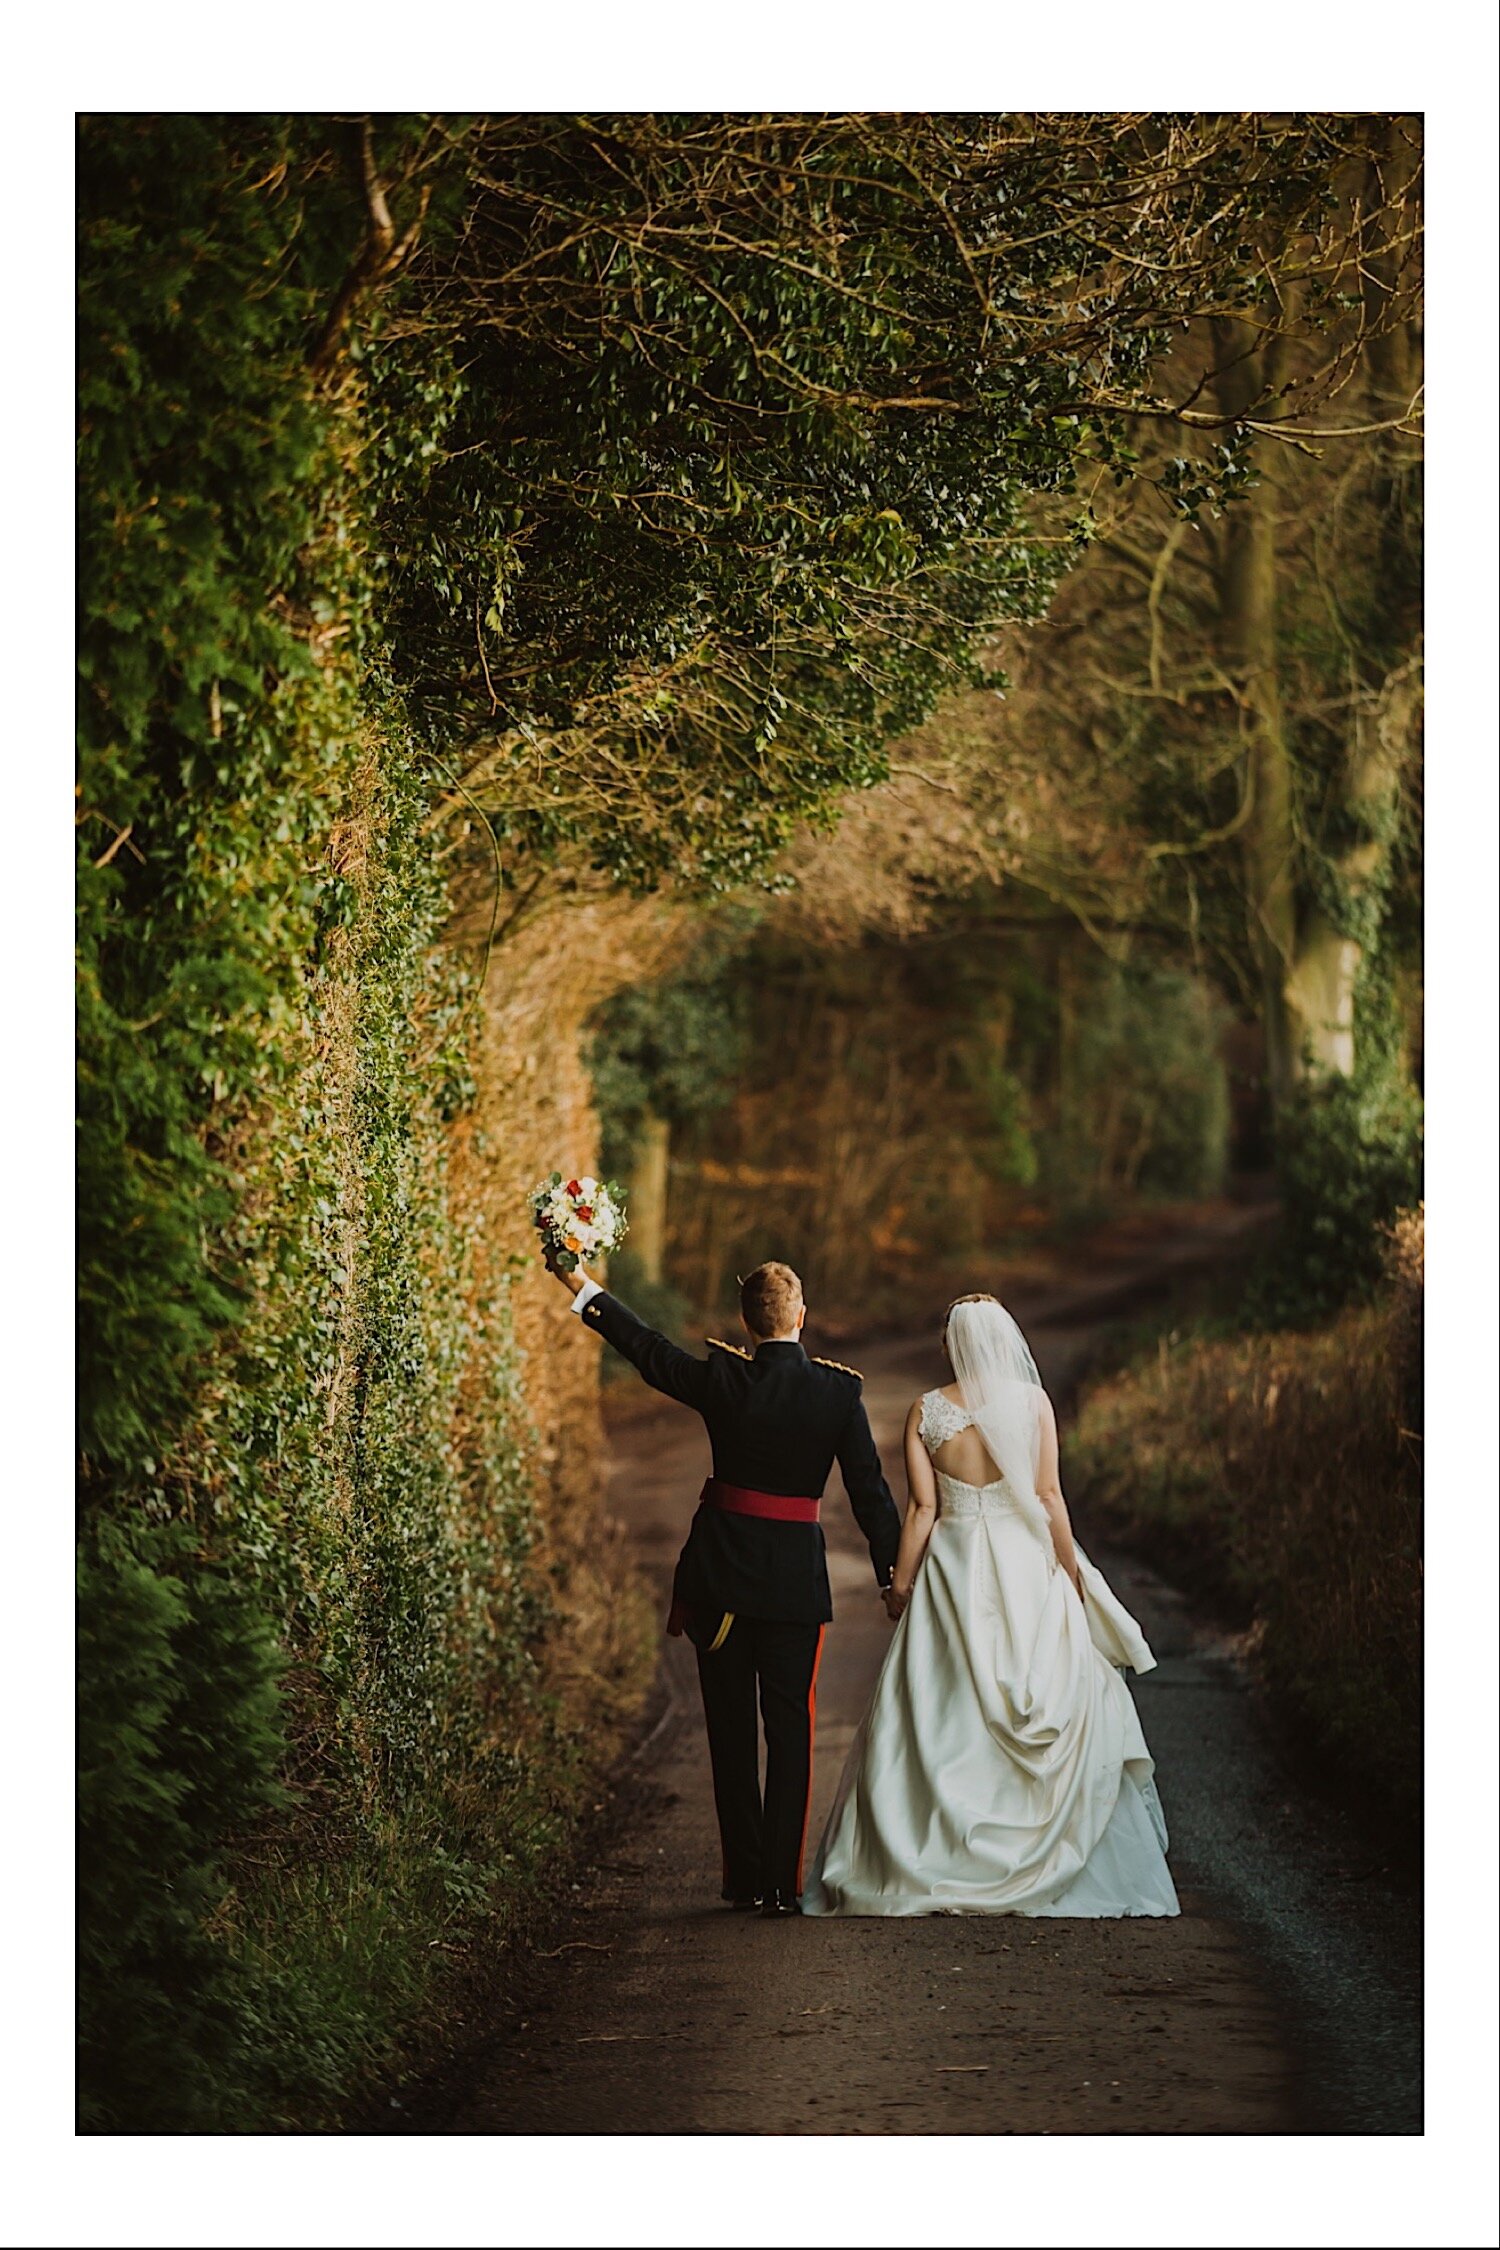 077_TWS-805_bride__couple_photography_henley_oxfordshire_millitary_crooked_wedding_portraits_groom_winter_billet.jpg